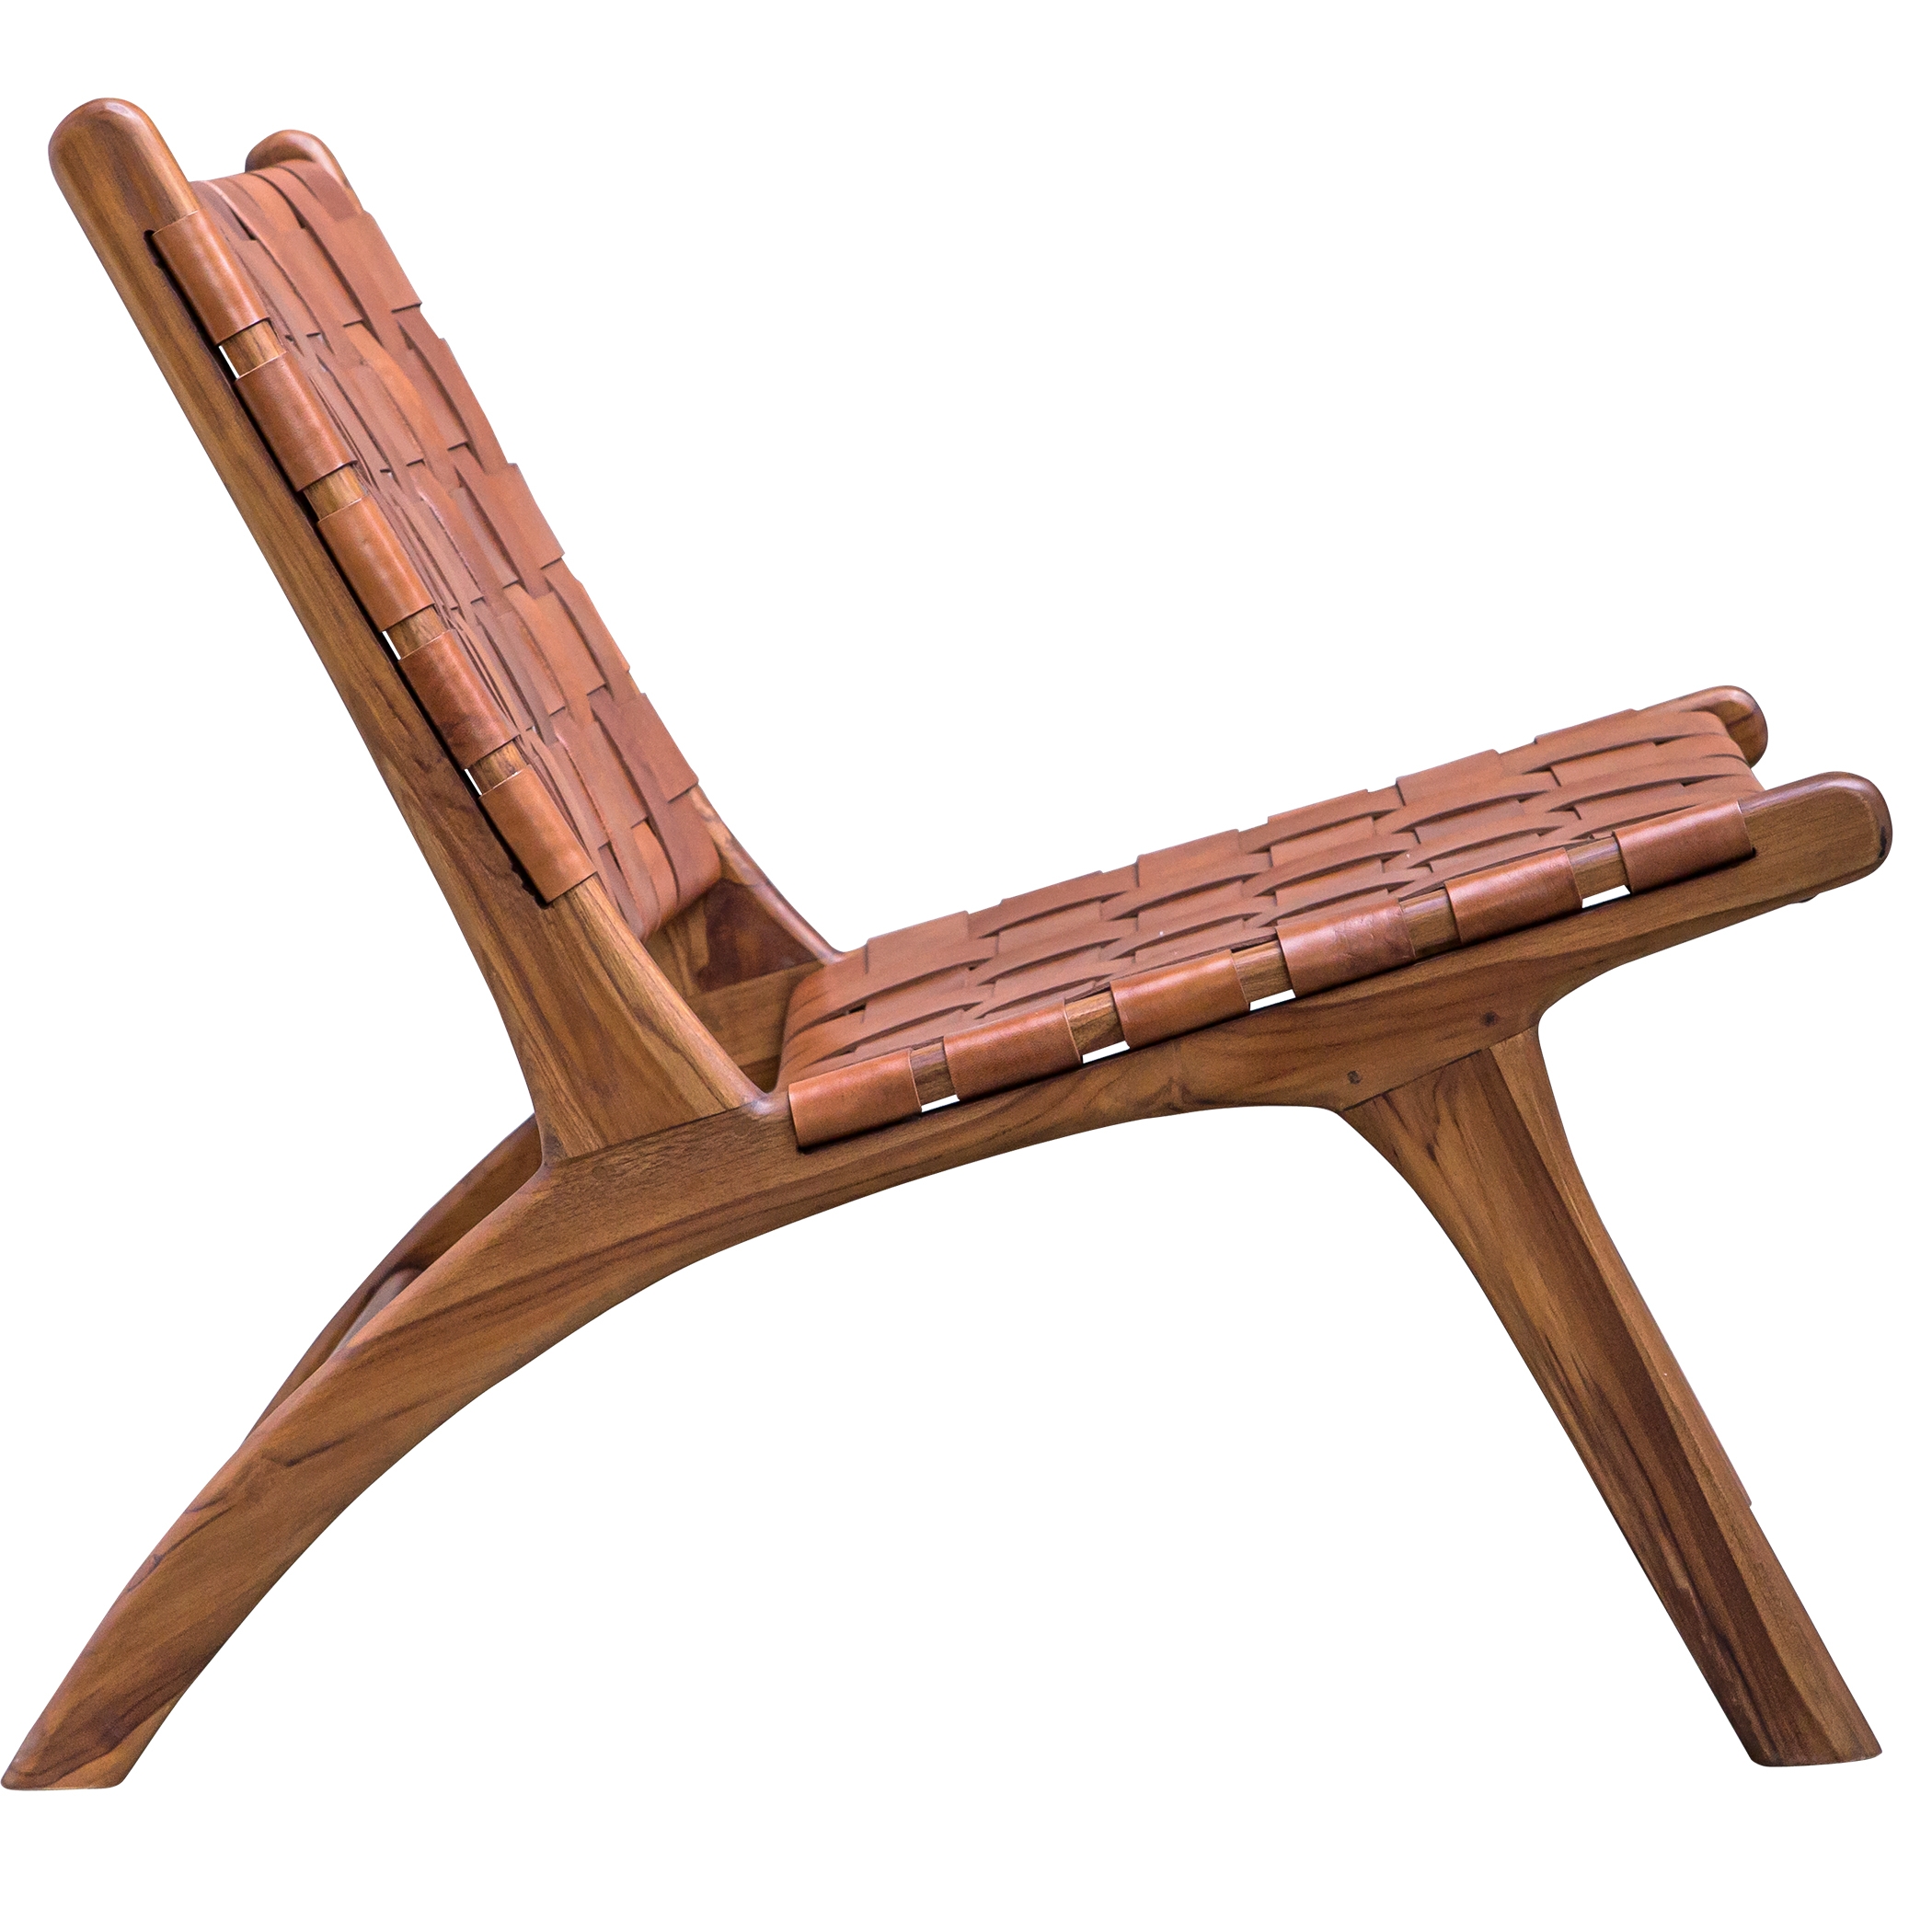 Plait Woven Leather Accent Chair - Image 2